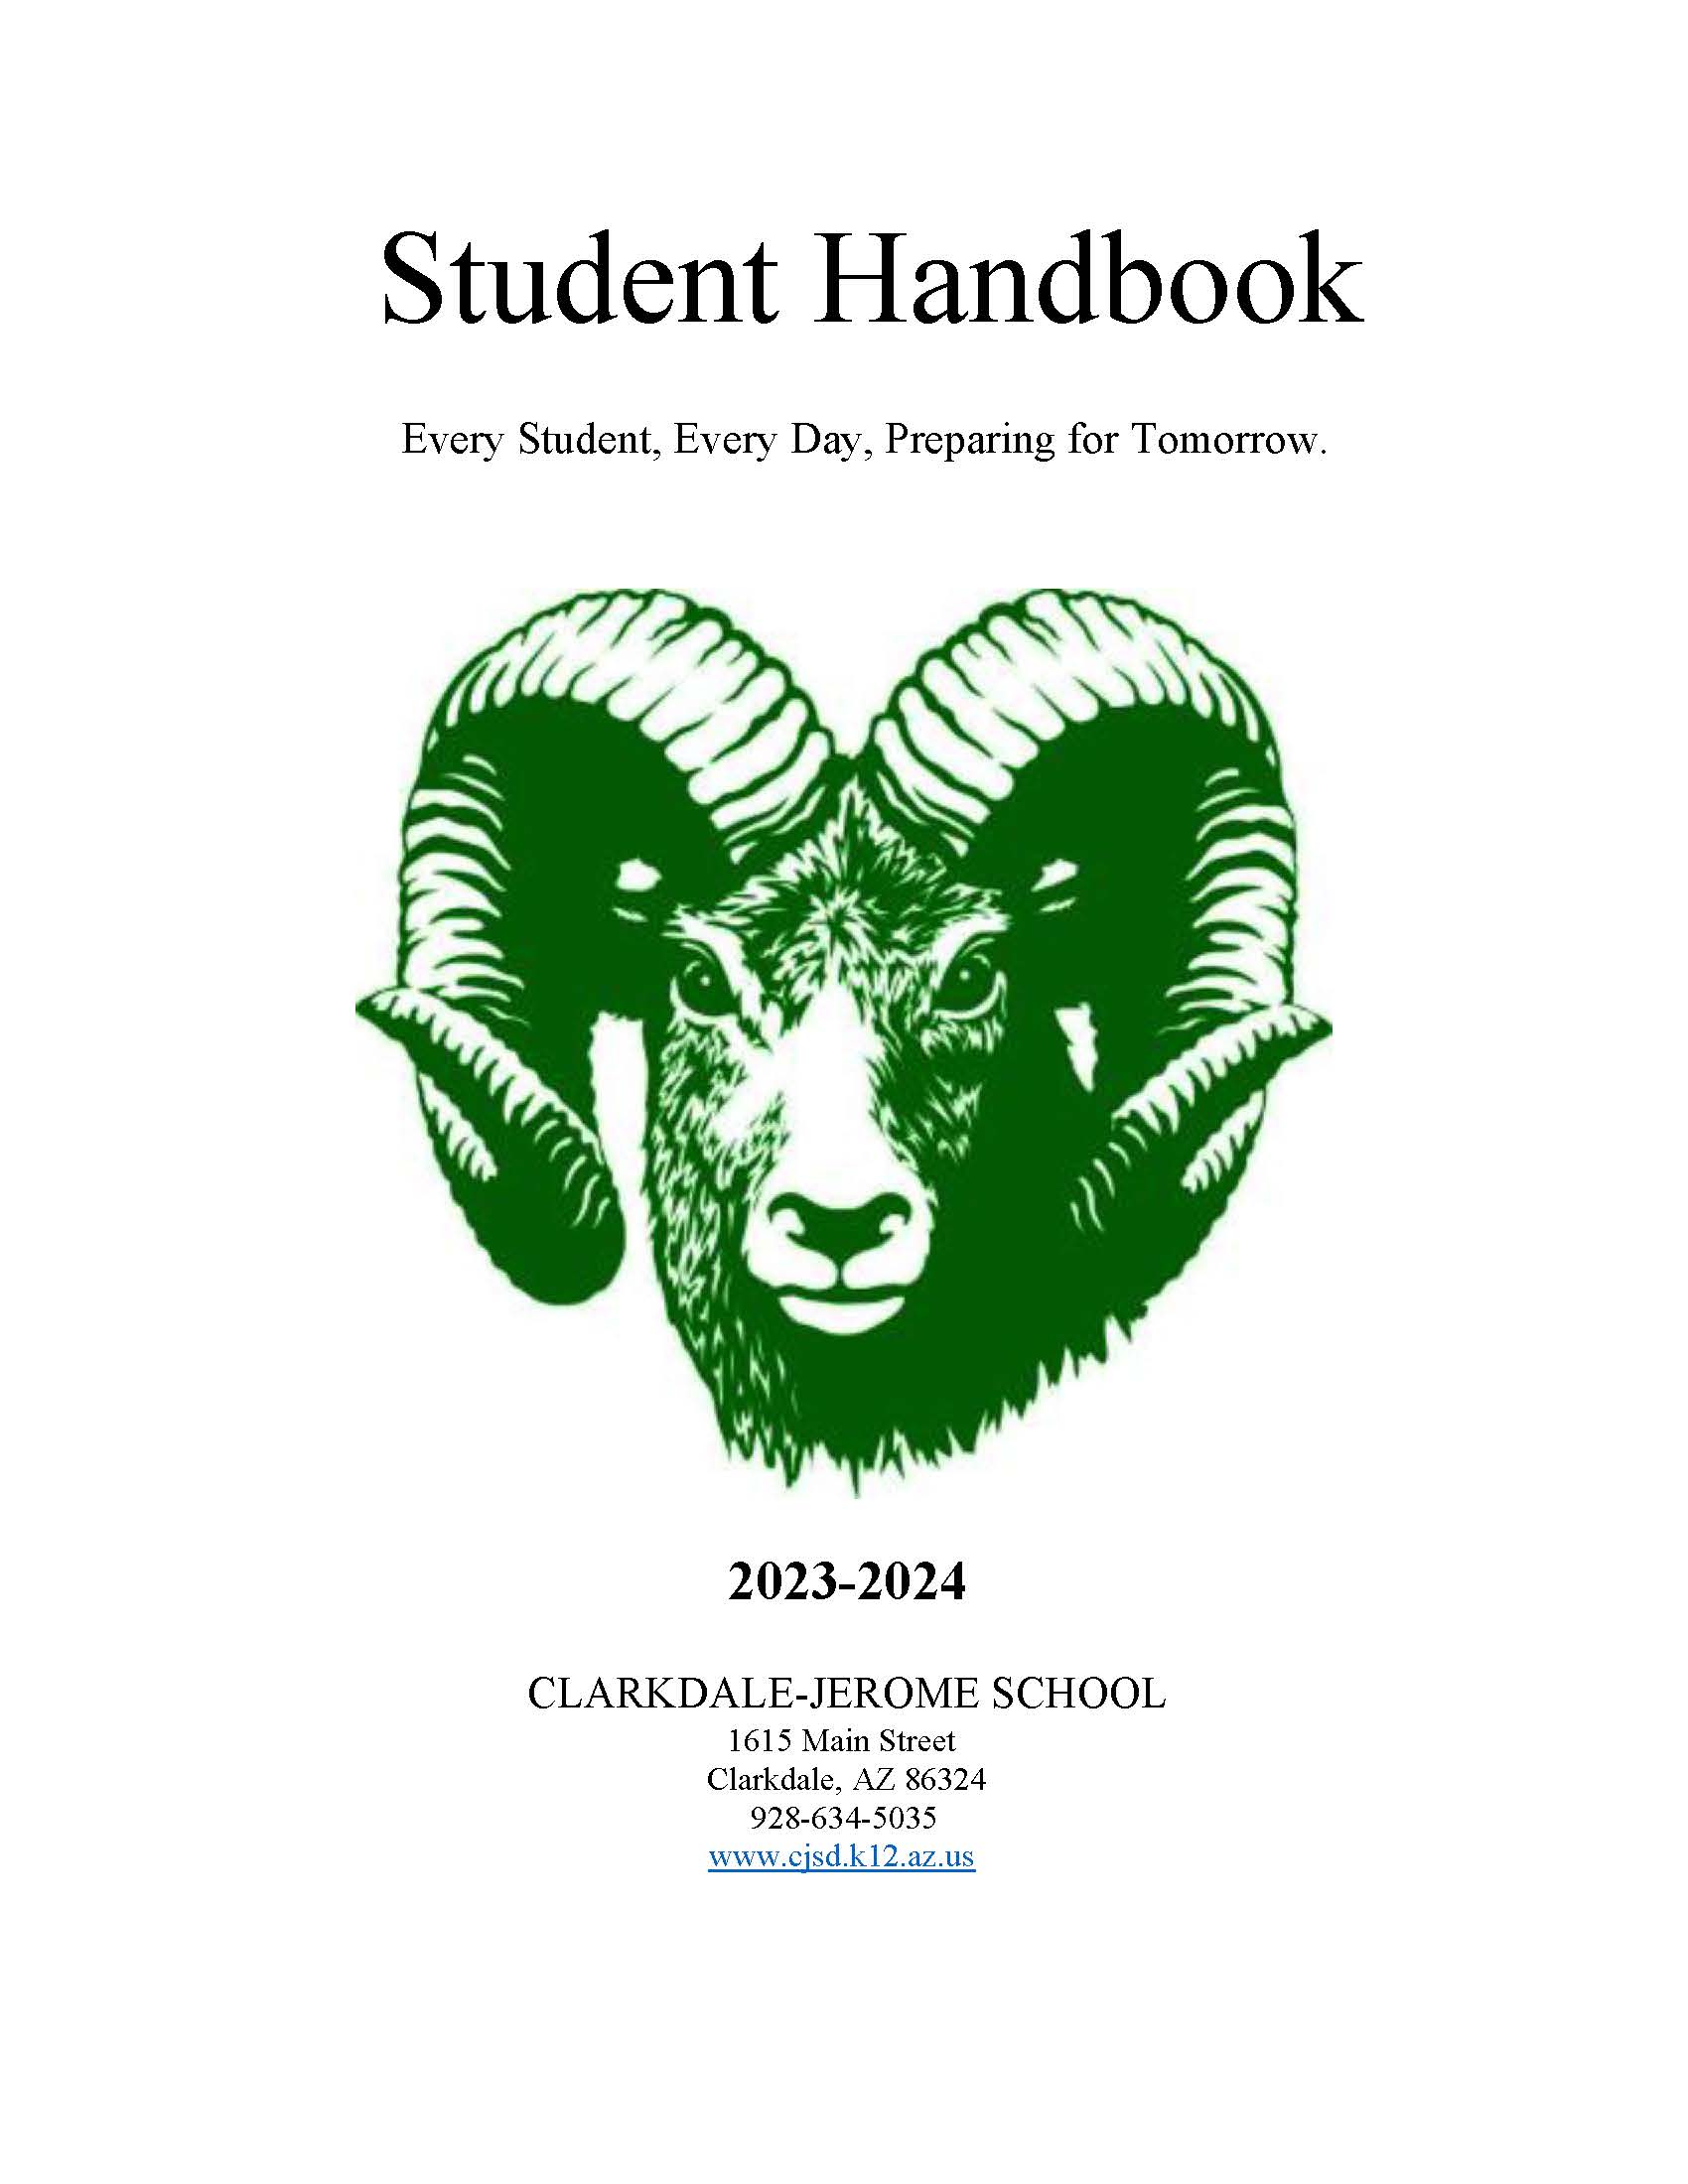 Student Handbook Cover 2023-2024